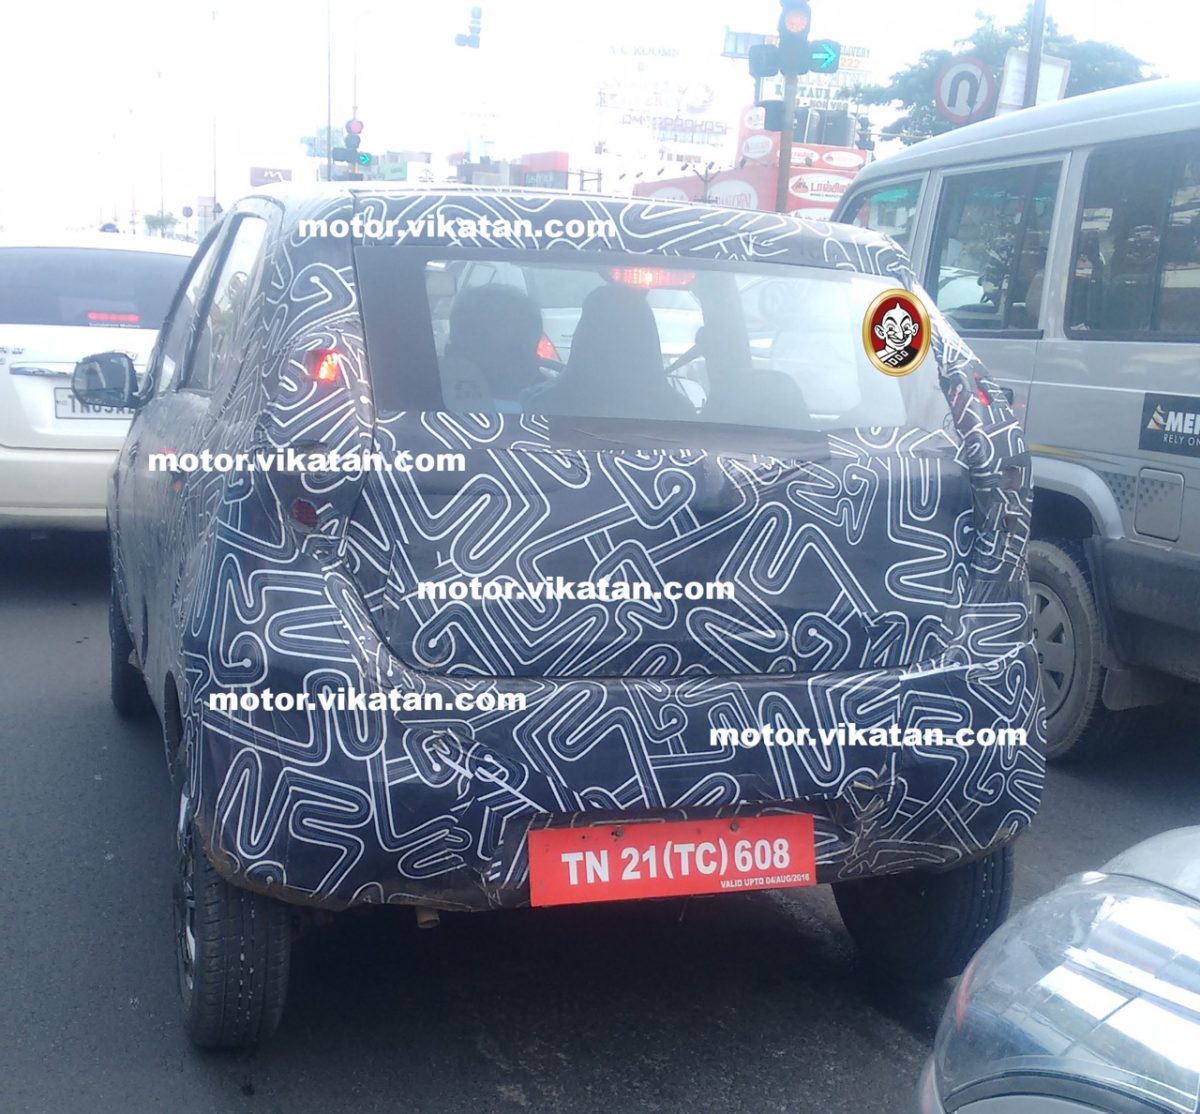 Datsun Redi GO spy image India